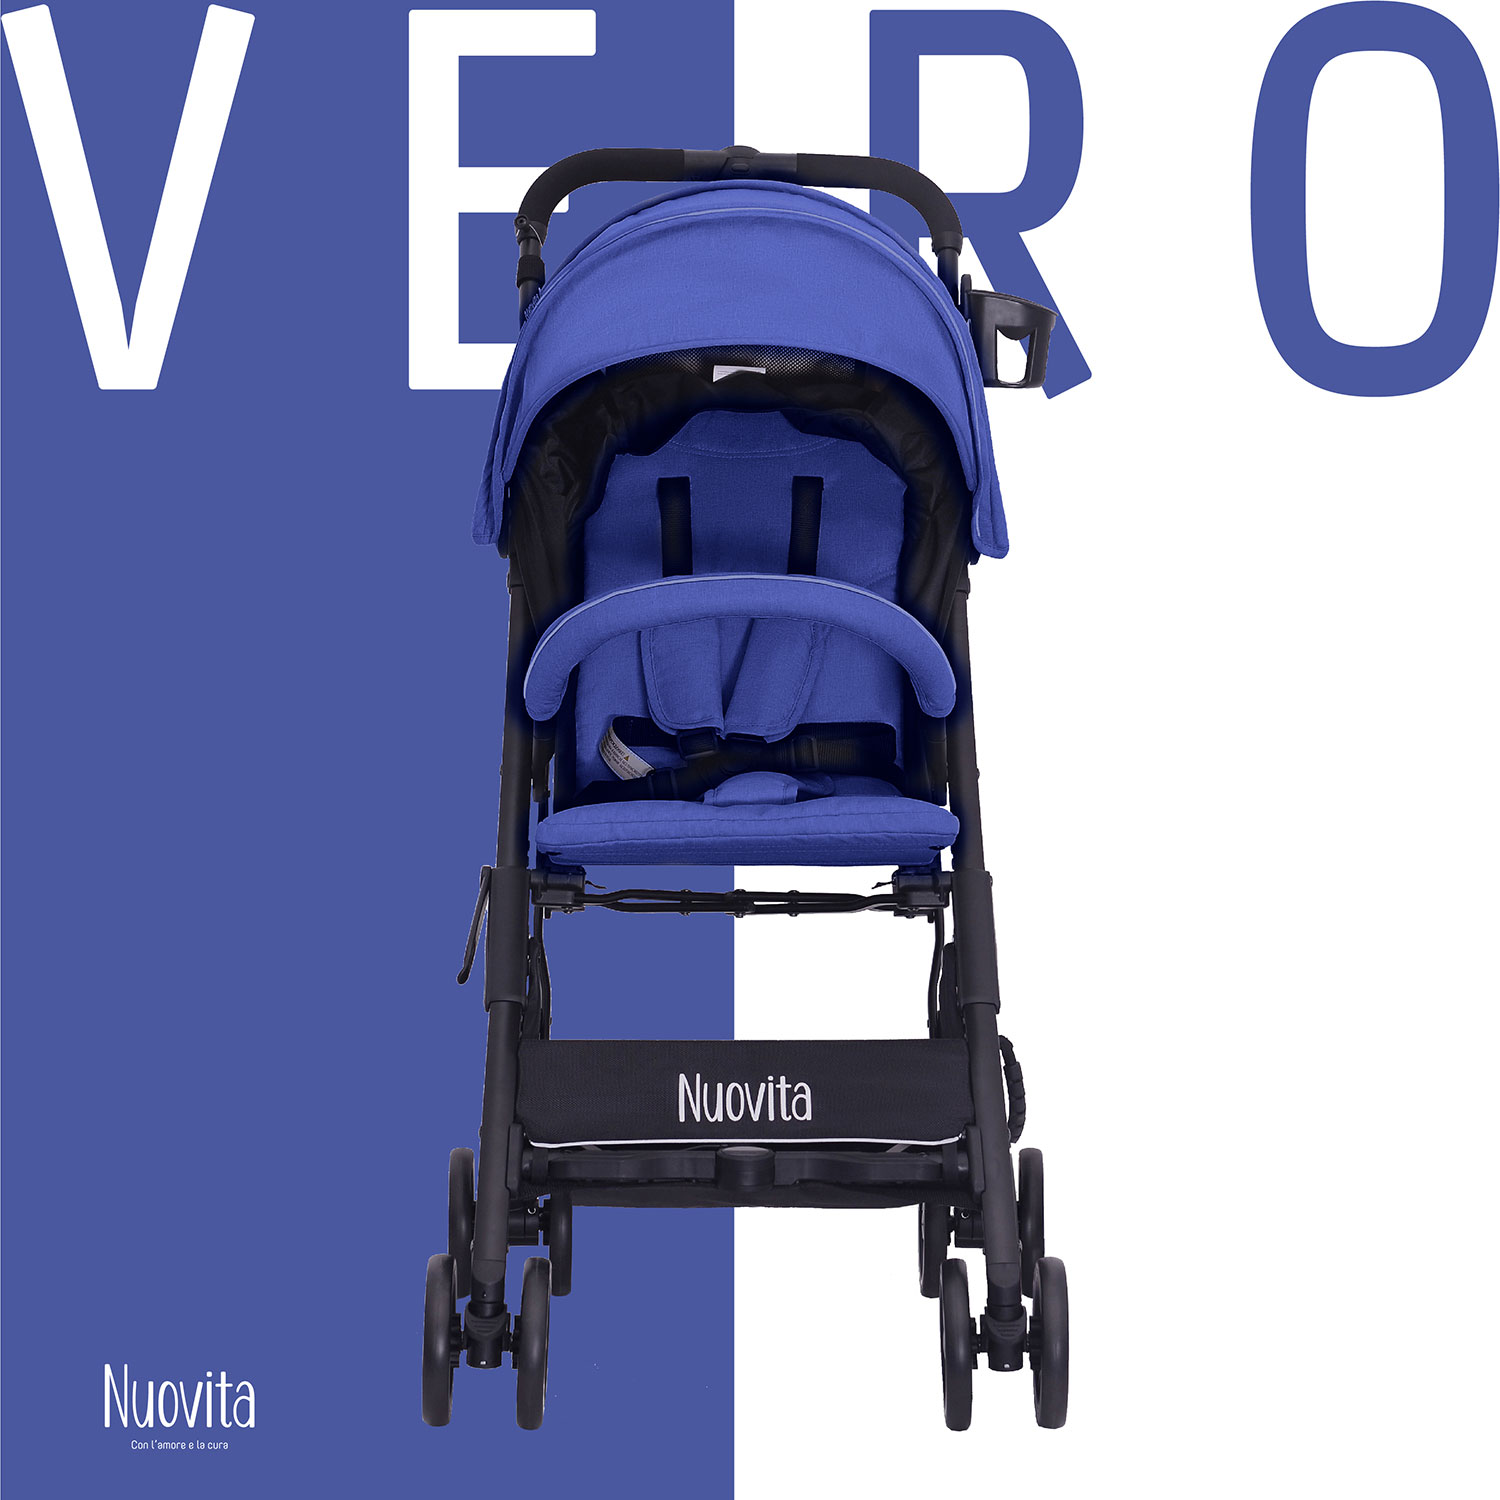 Прогулочная коляска Nuovita Vero Blu Голубой прогулочная коляска nuovita vero blu голубой